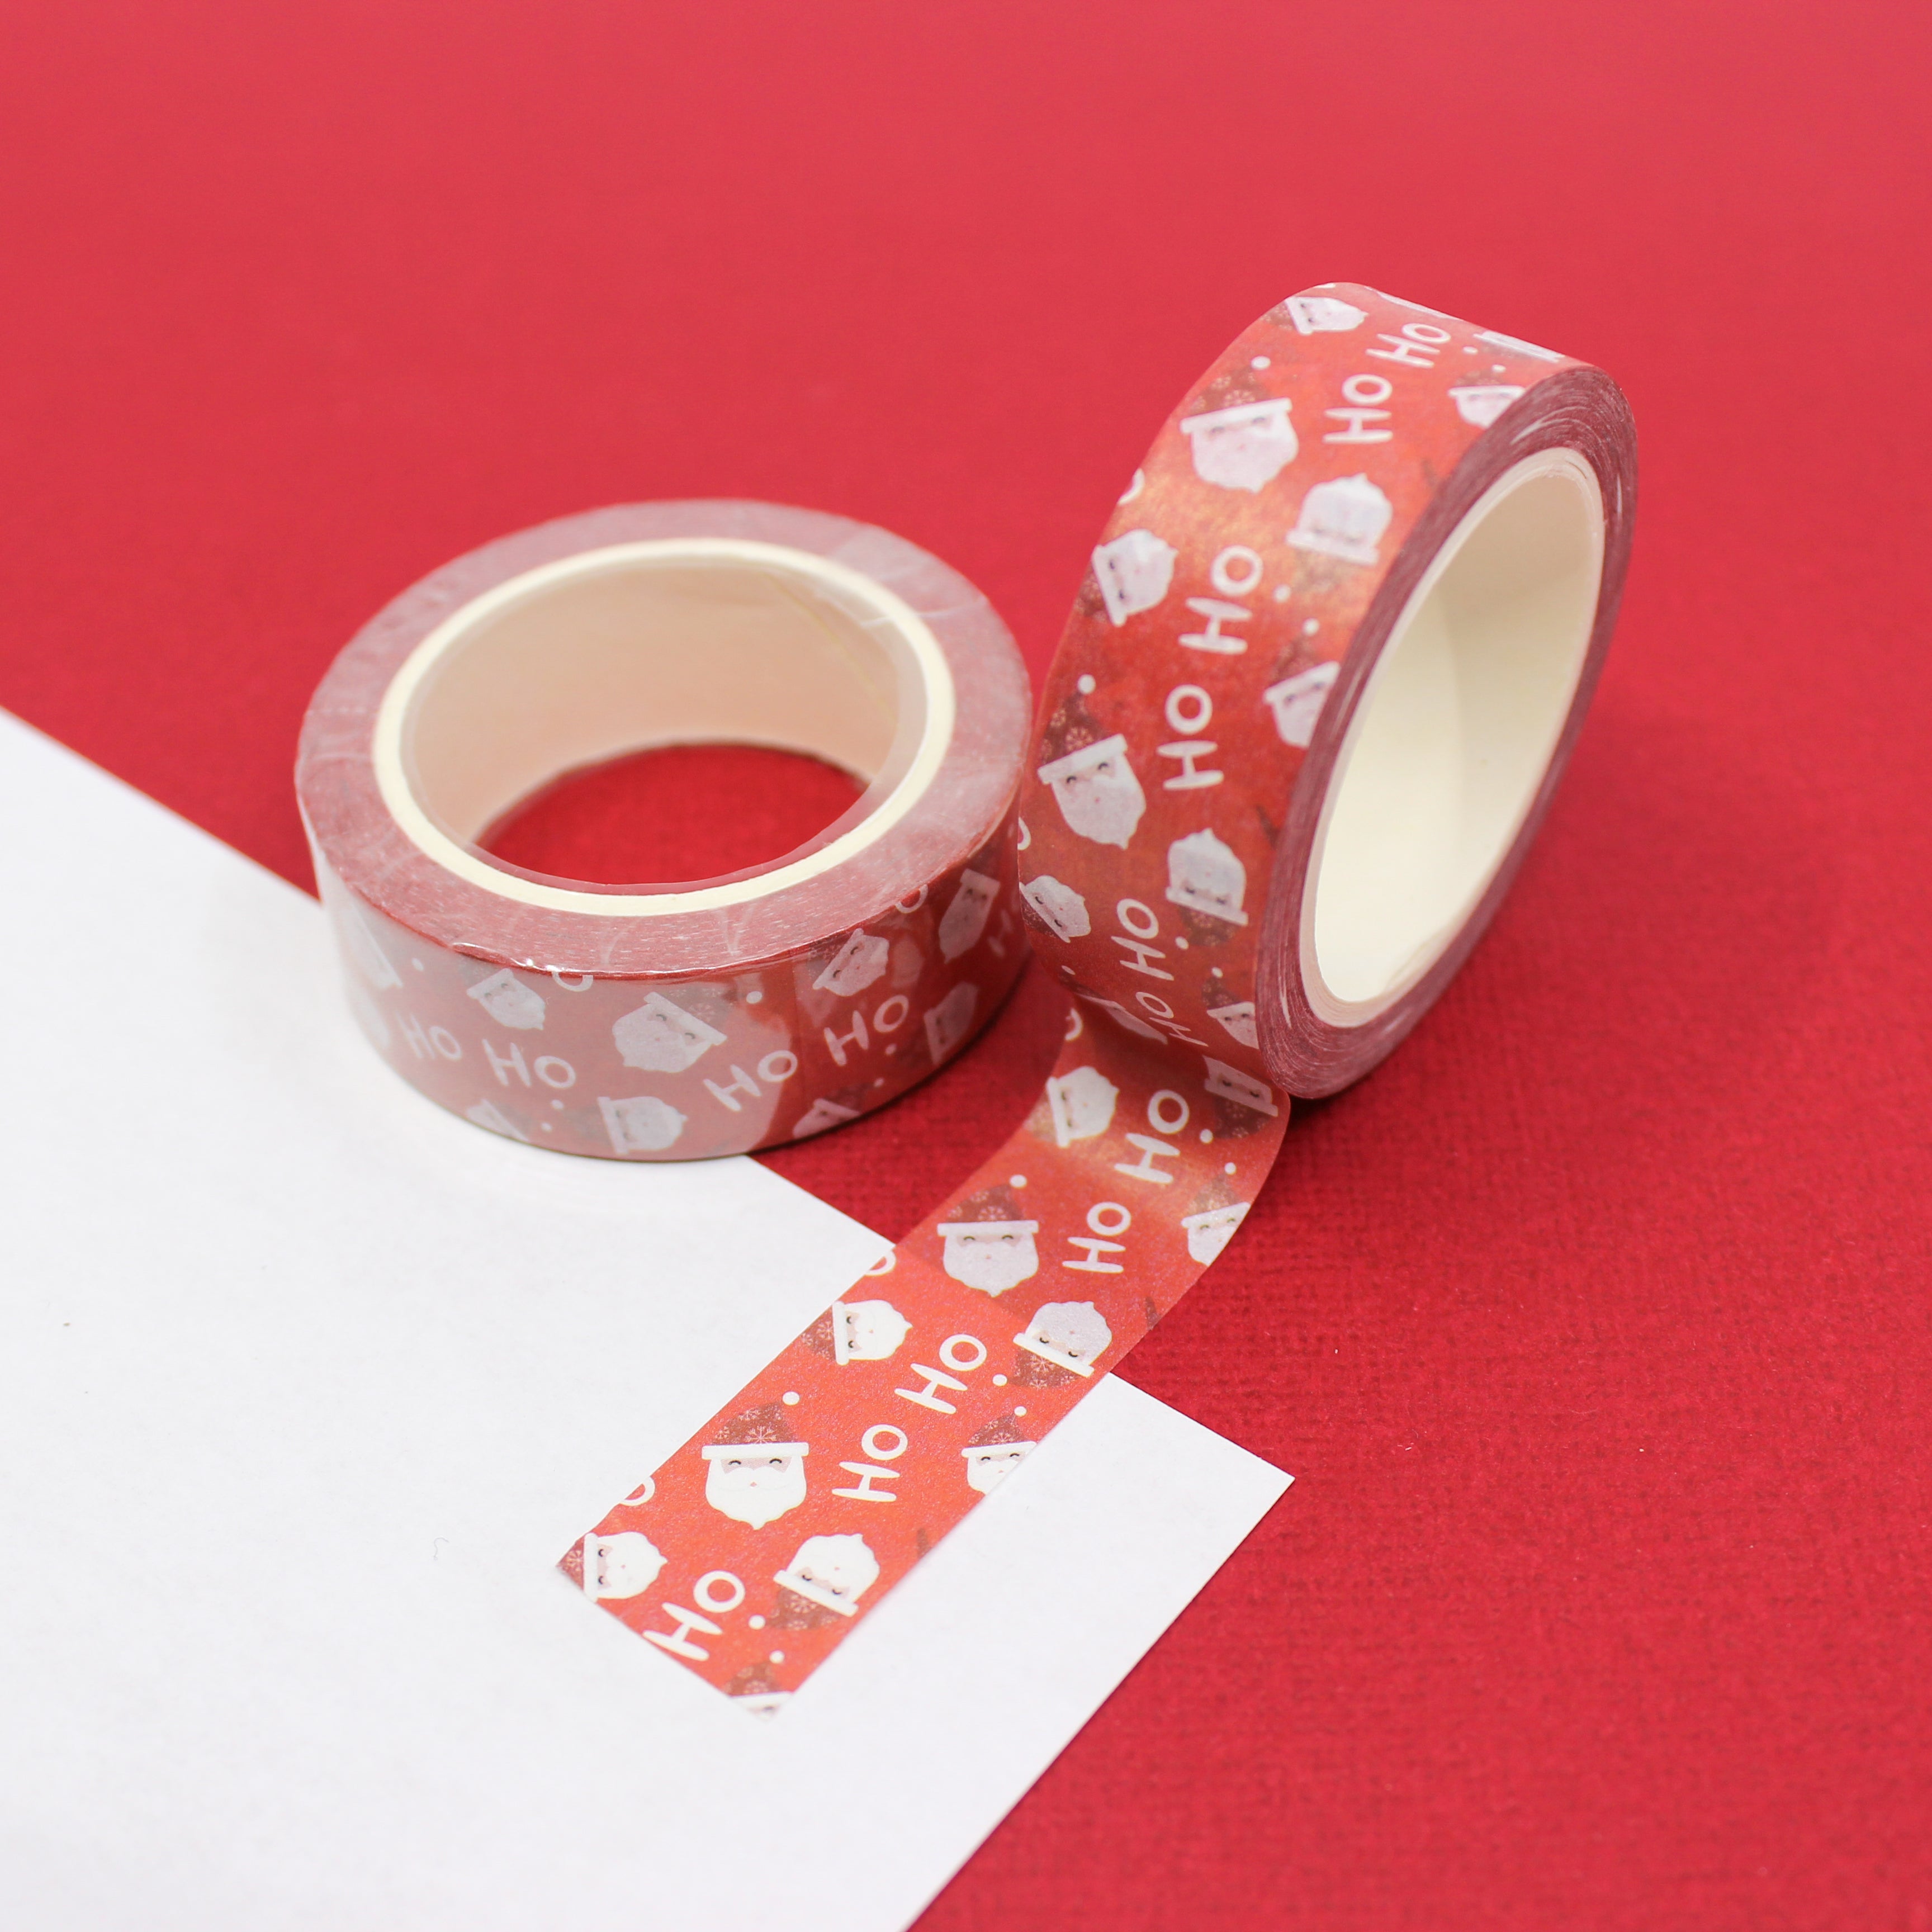 Jolly Ho Ho HO Santa Claus Washi tape from BBB Supplies Craft Shop.